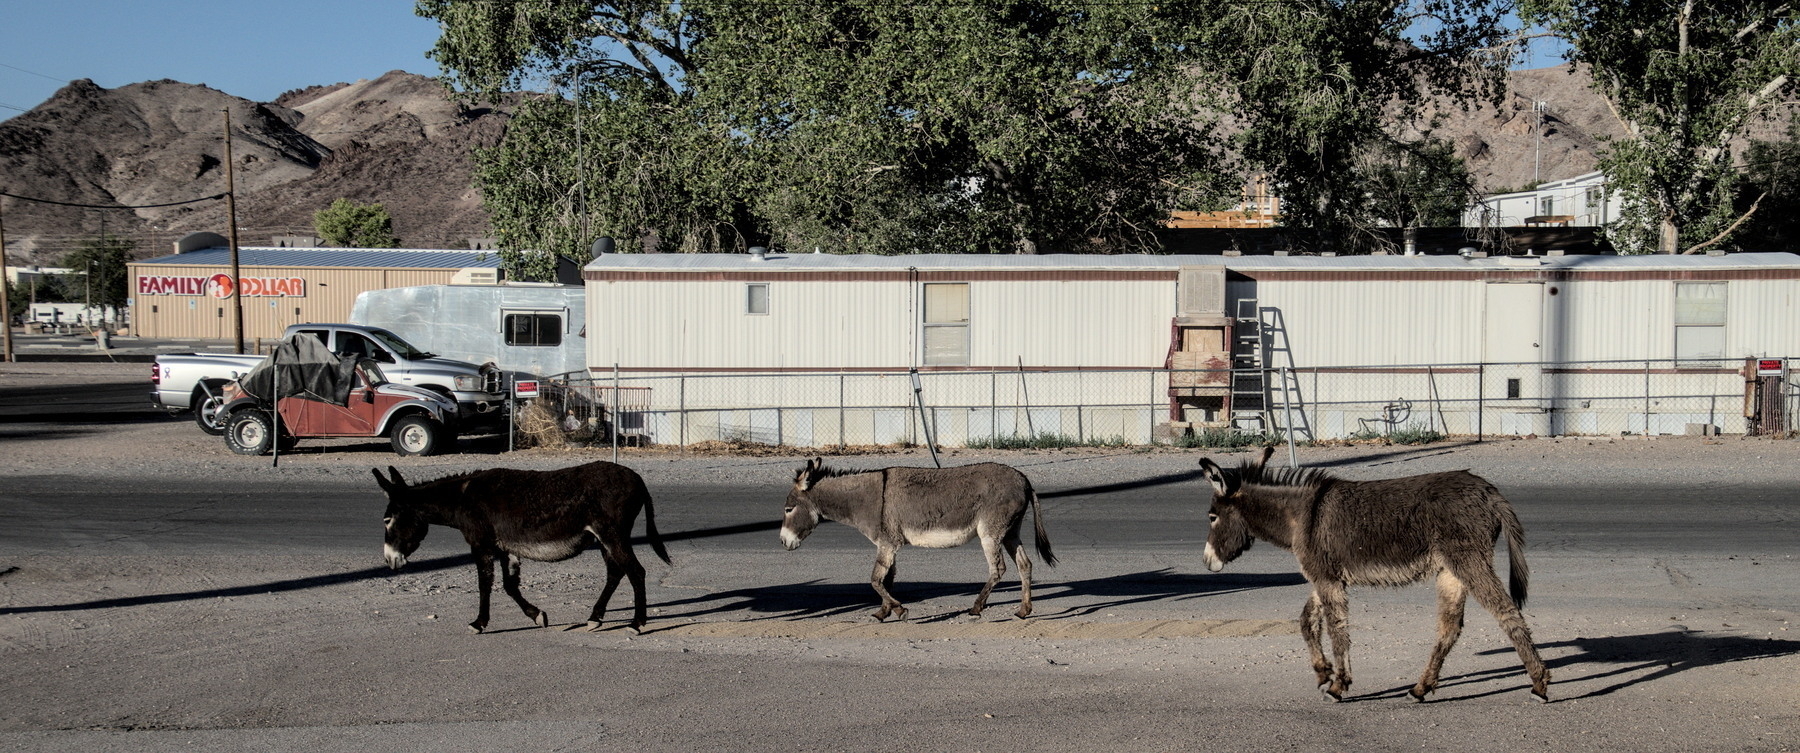 Three free-range donkeys wandering the streets of a desert town.